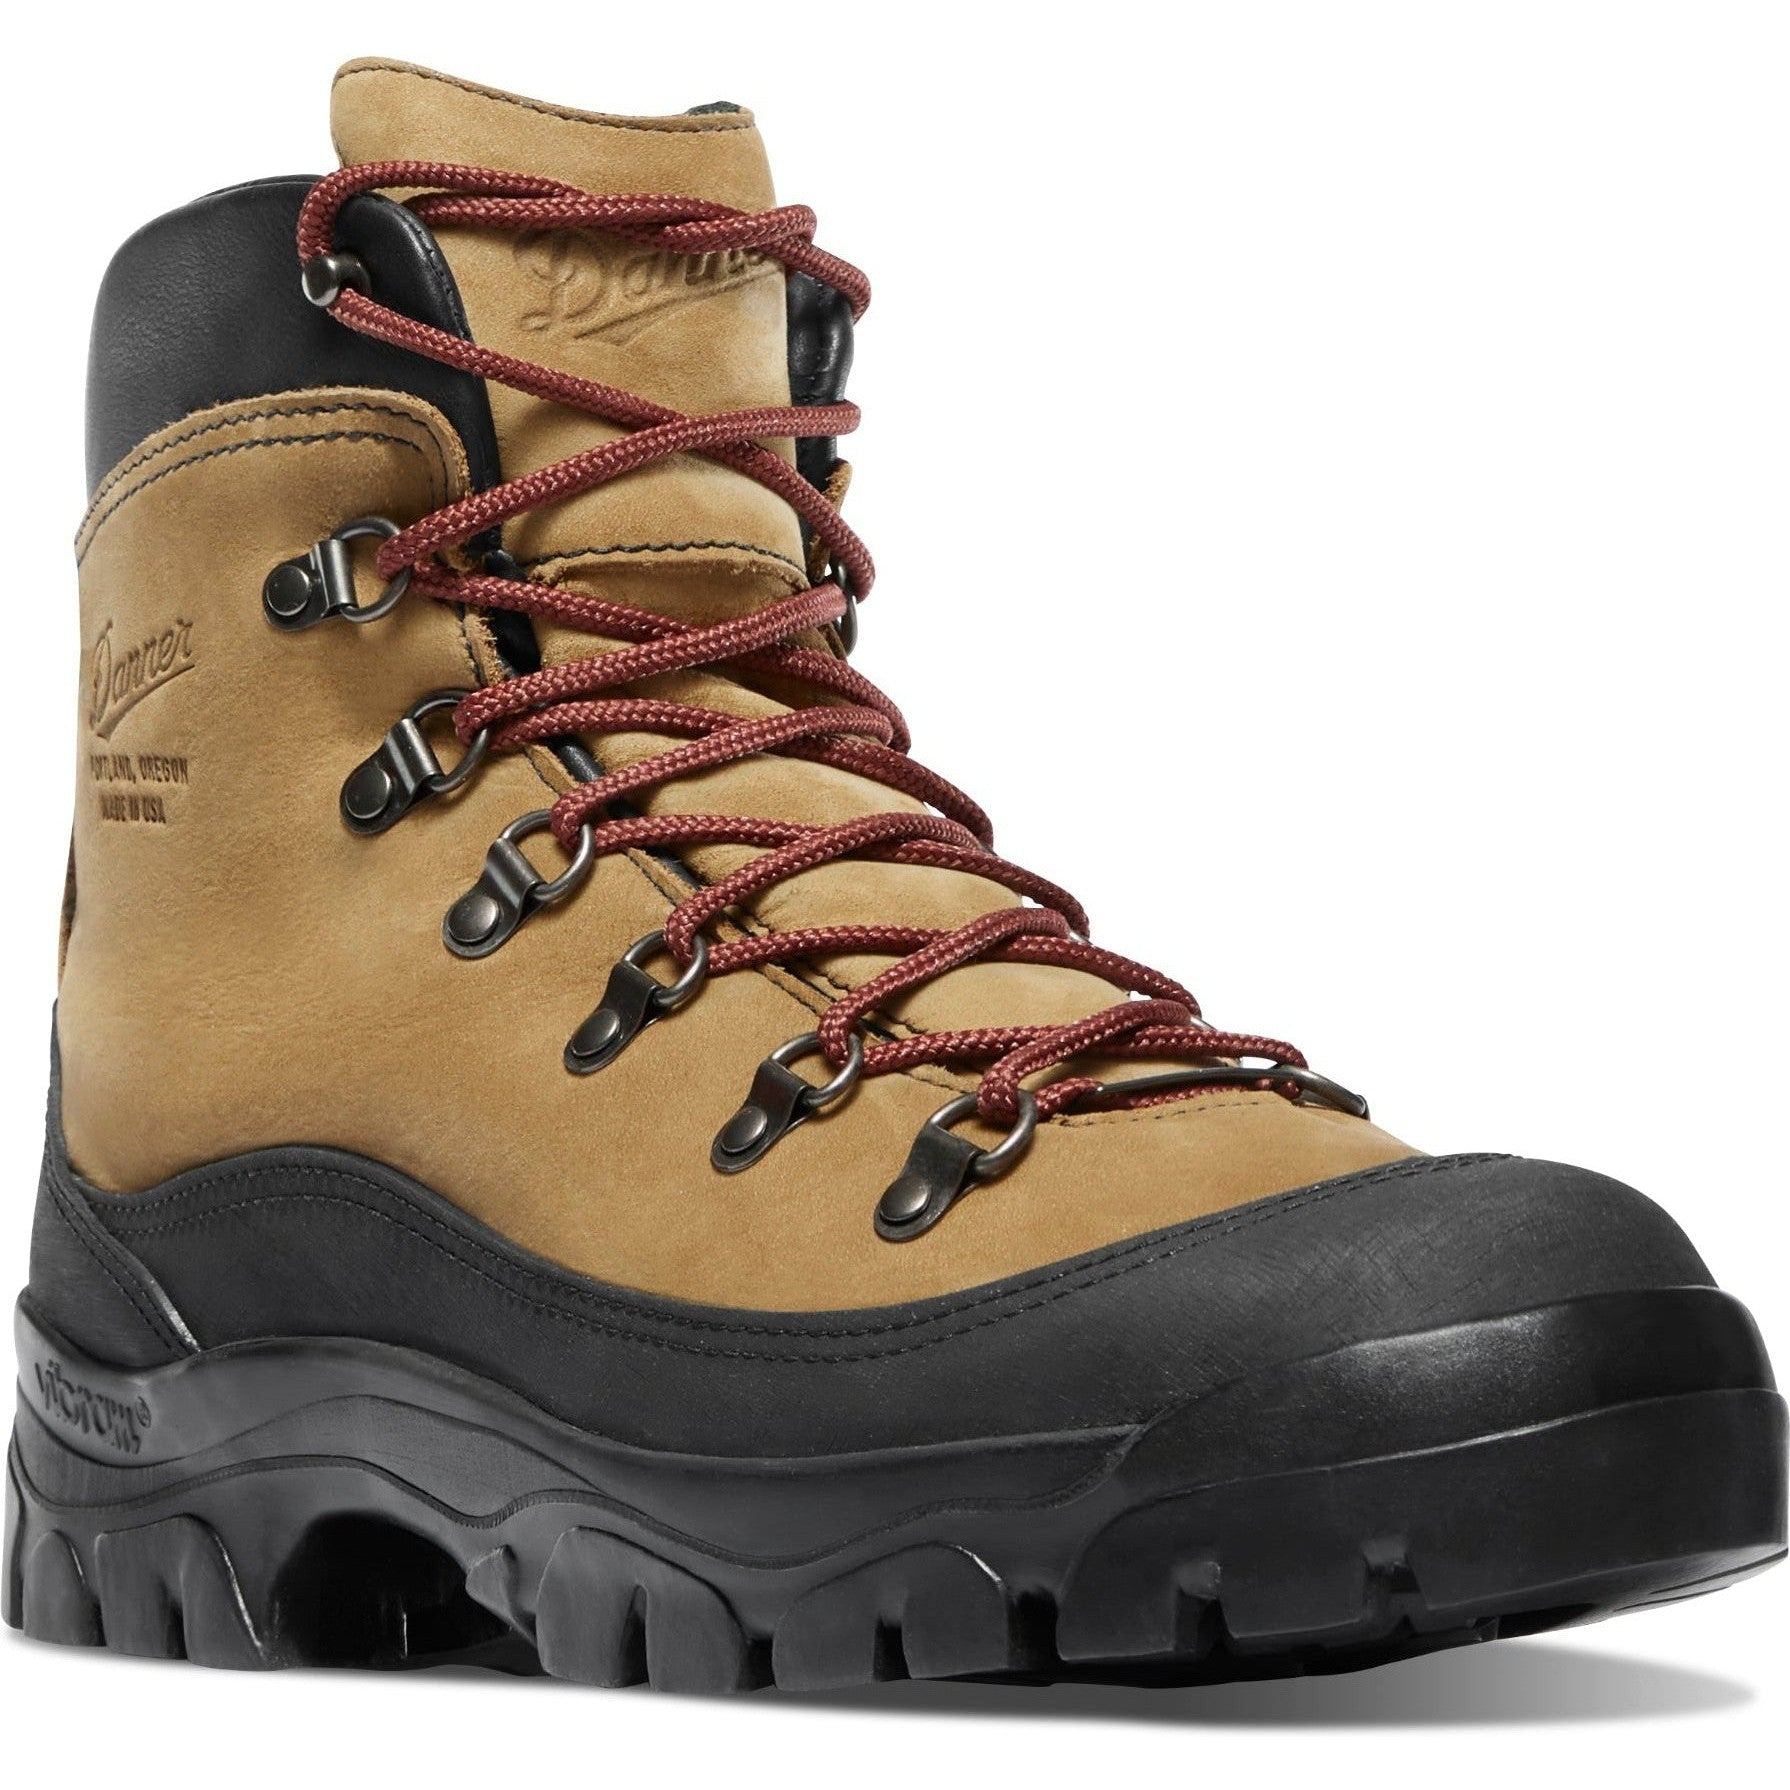 Danner Men's Crater Rim 6" WP USA Made Hiking Boot - Brown - 37440 7 / Medium / Brown - Overlook Boots